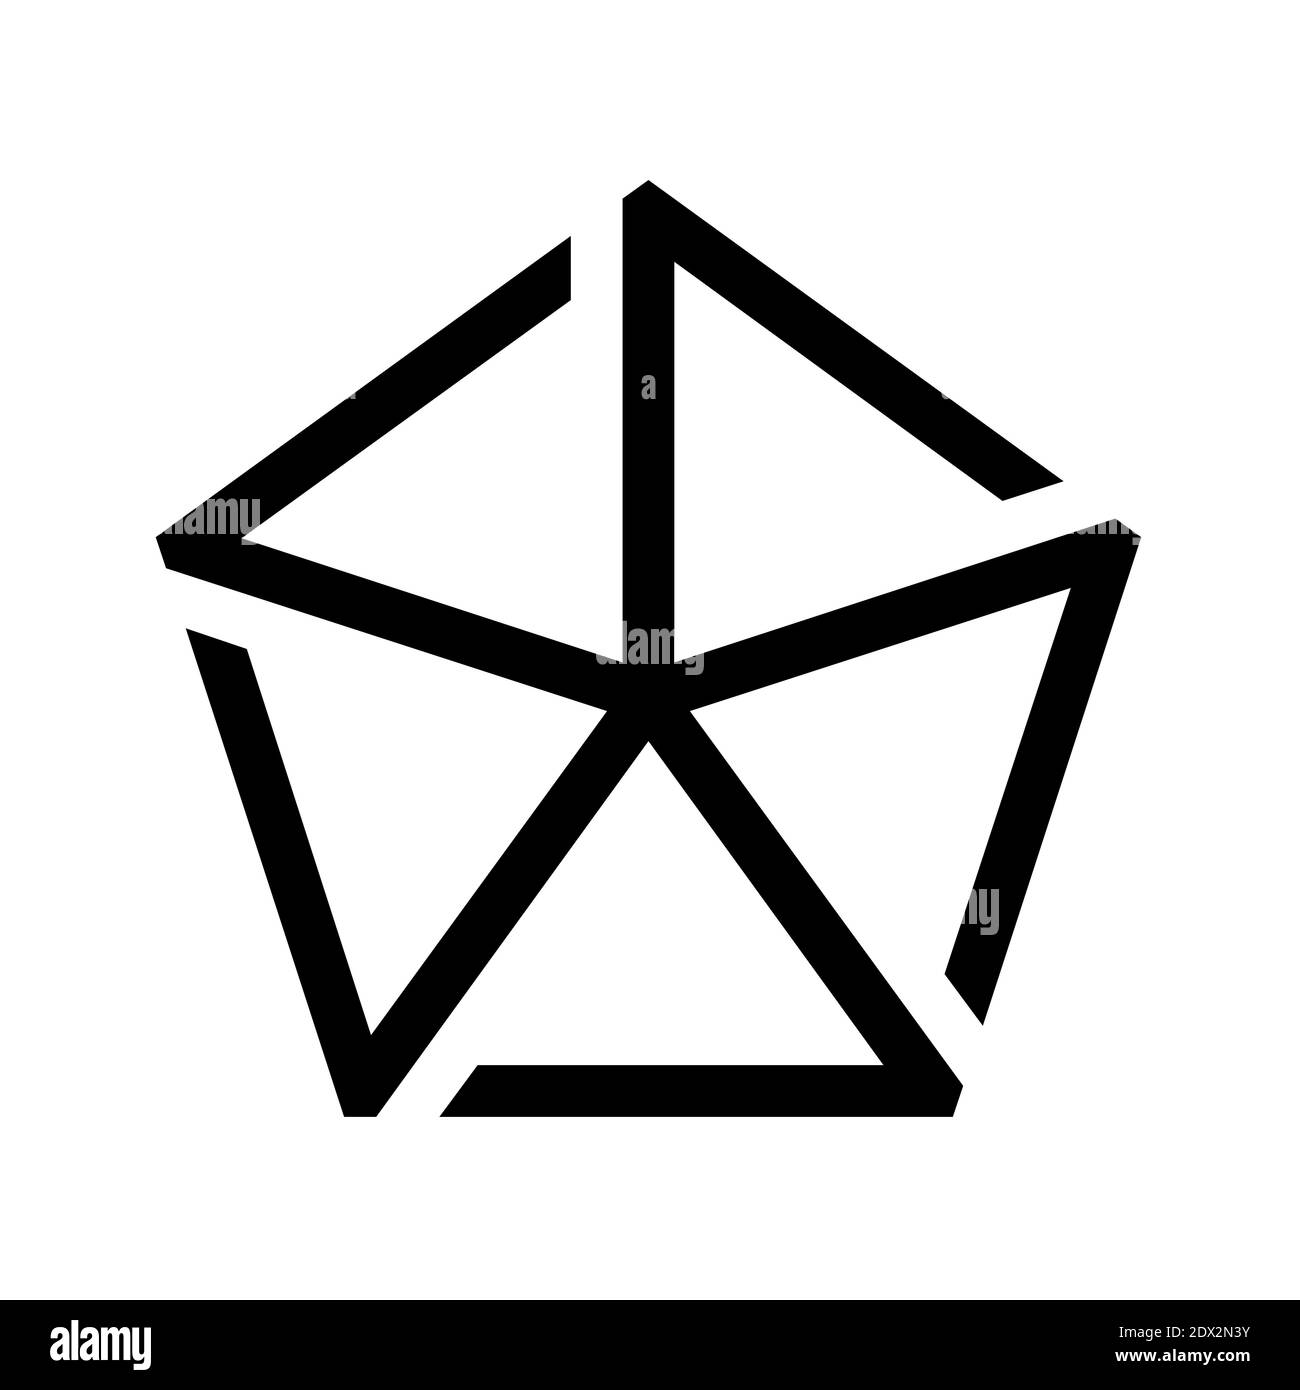 Pentagonal cross symbol icon Stock Photo